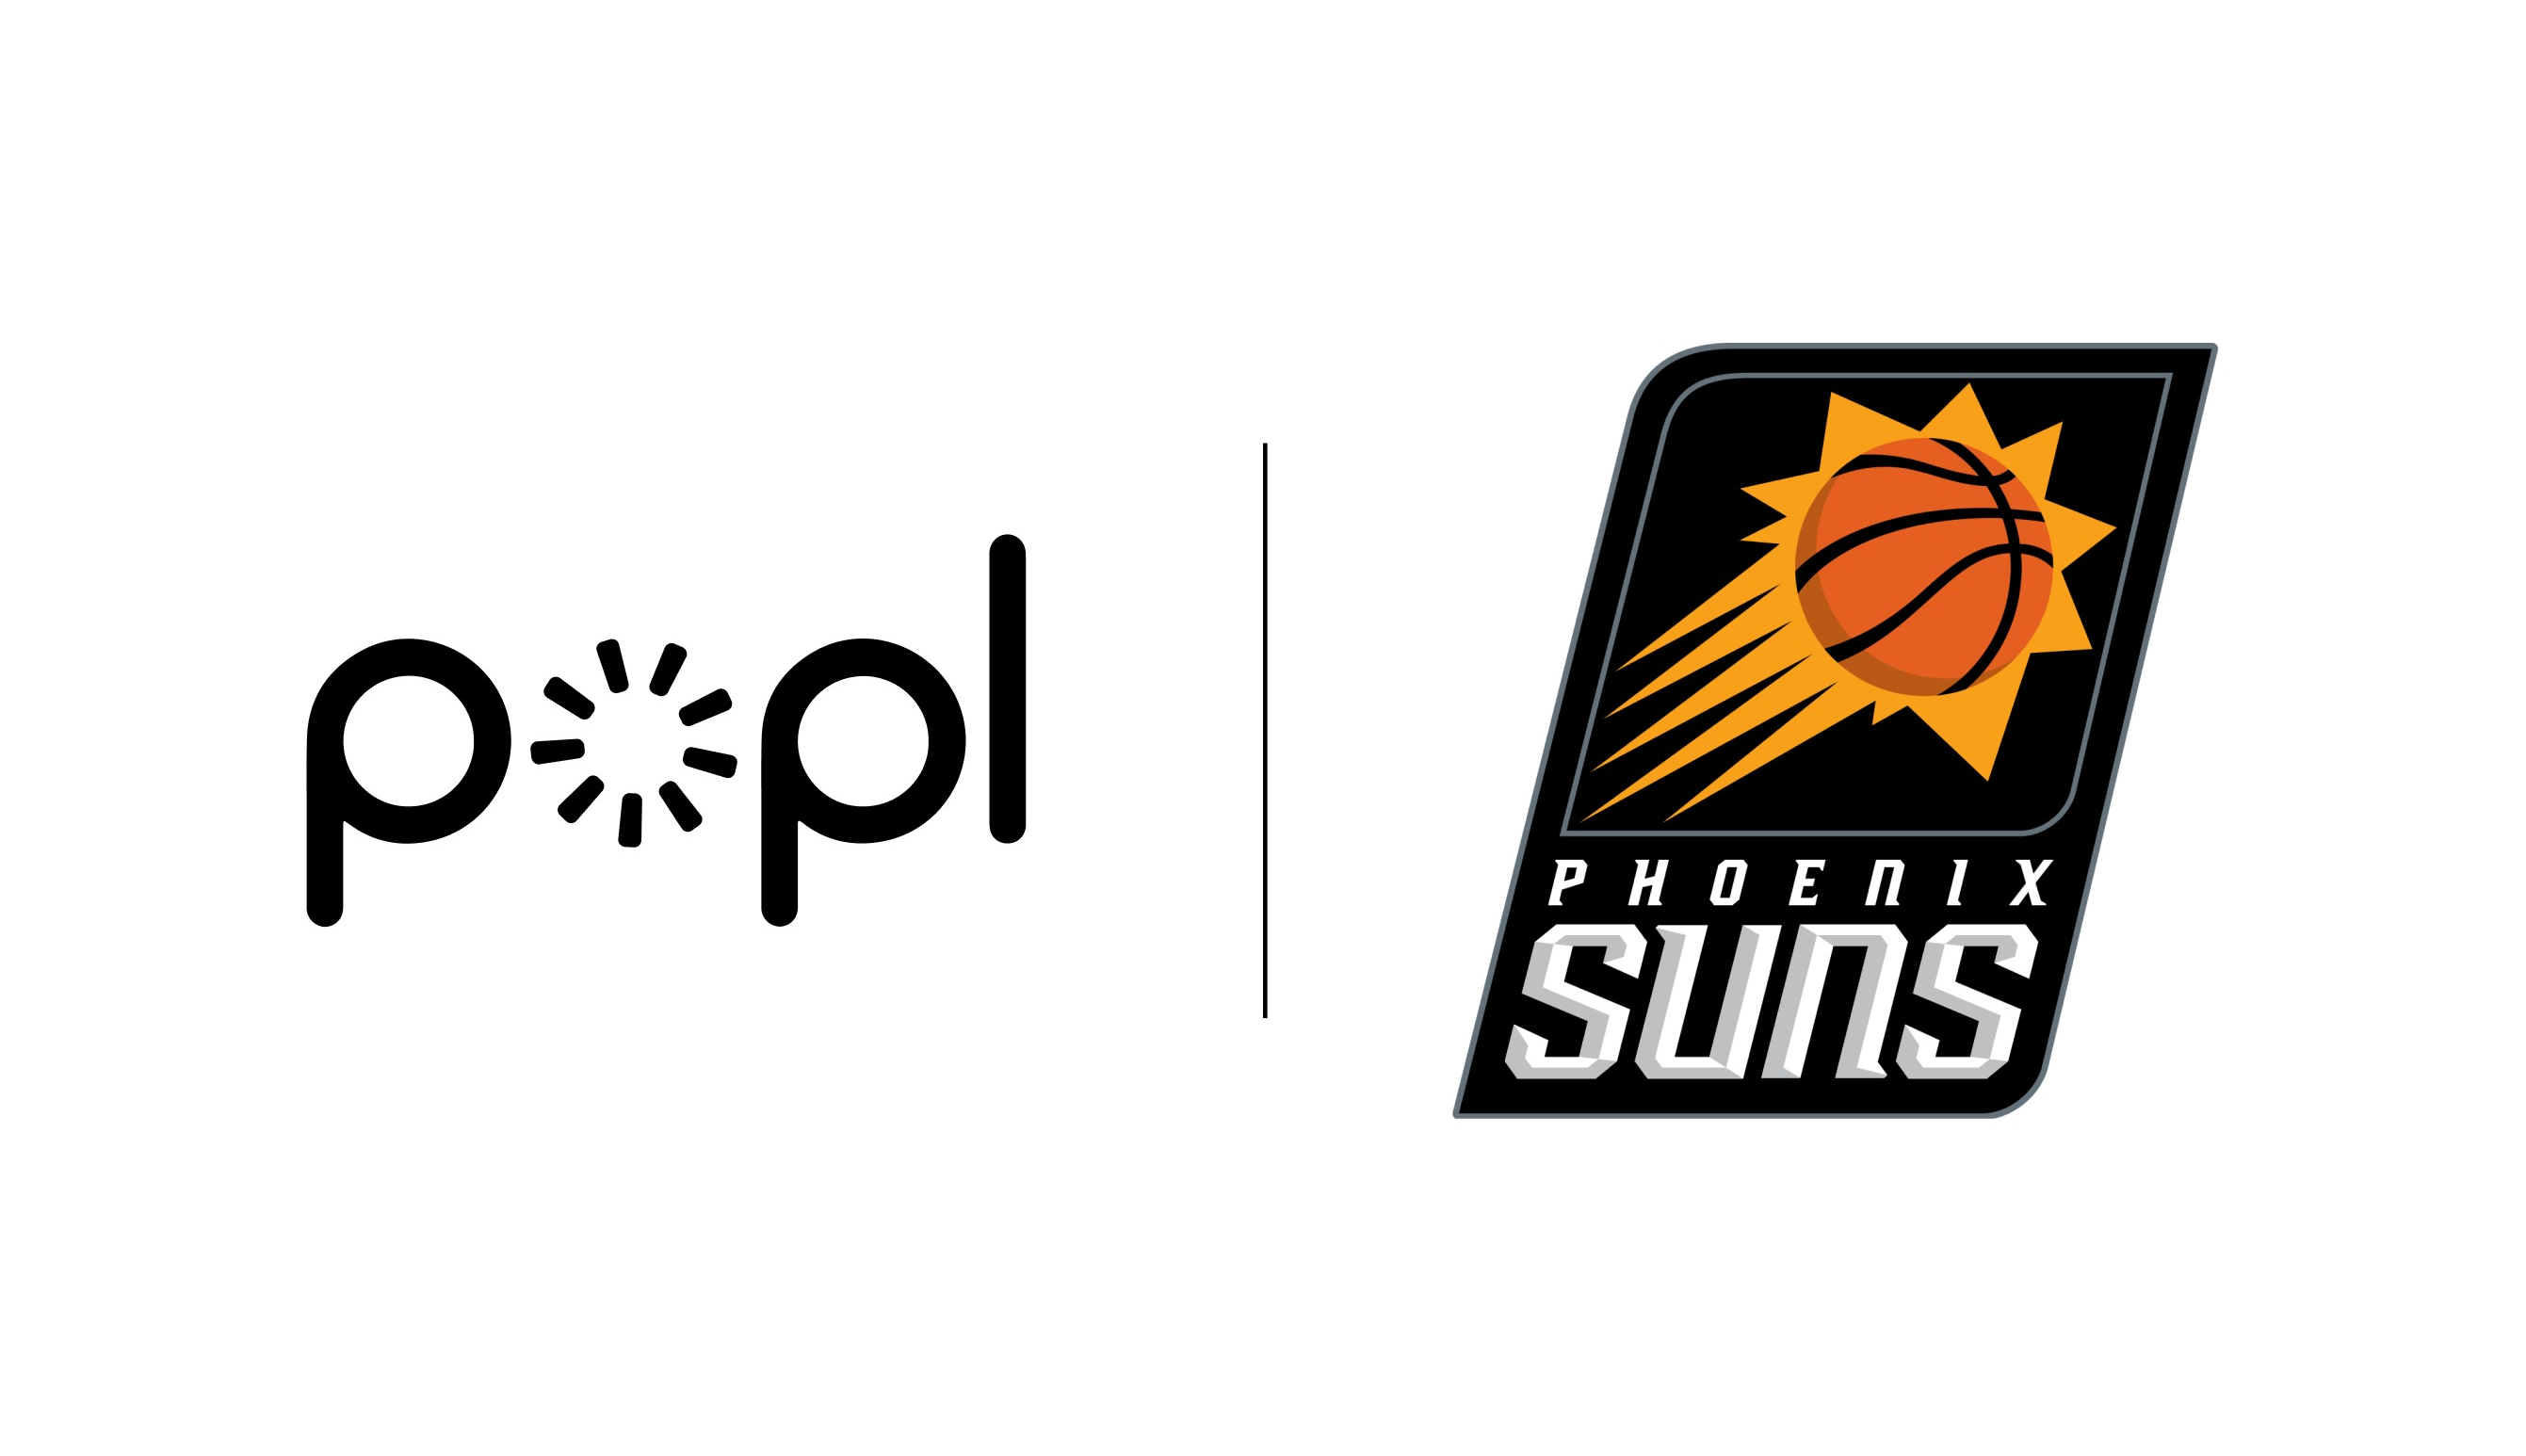 NBA's Phoenix Suns Go Paperless with Popl's Digital Business Card Platform